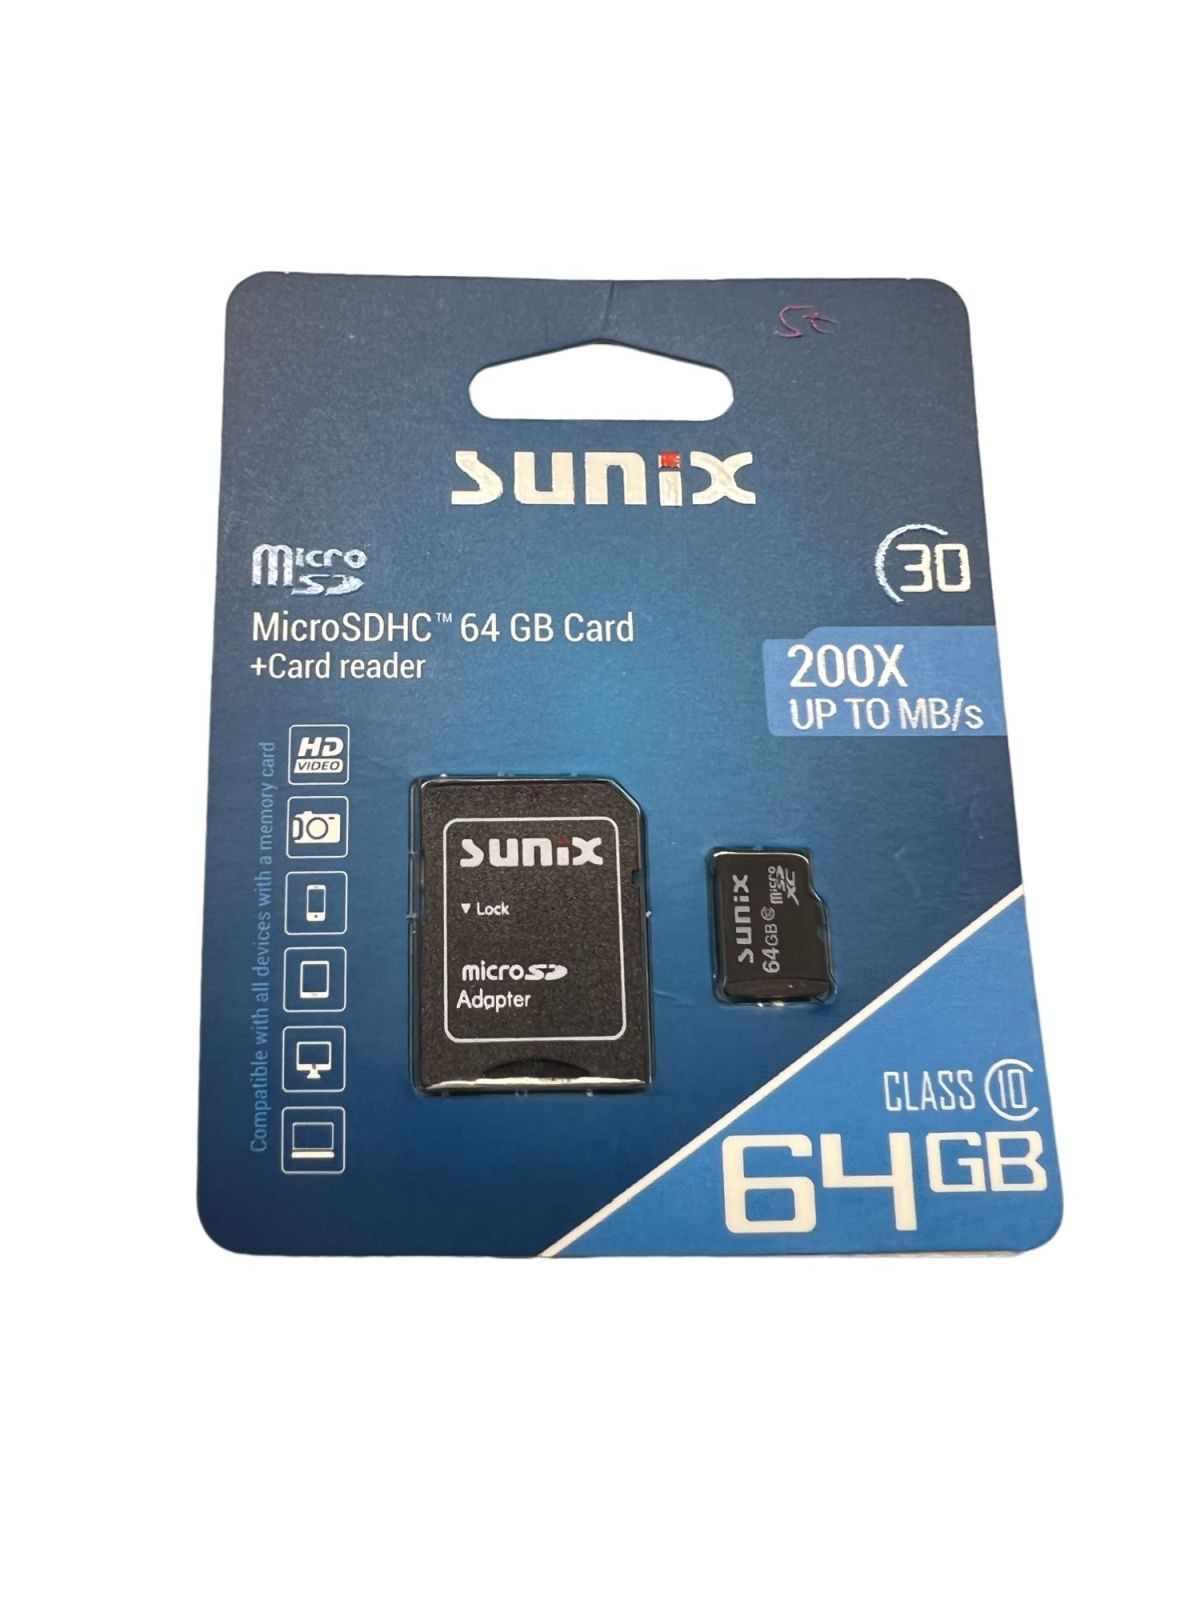 Class 10, SUNIX MicroSDHC Speicherkarte GB Karte, 64 Micro-SDHC